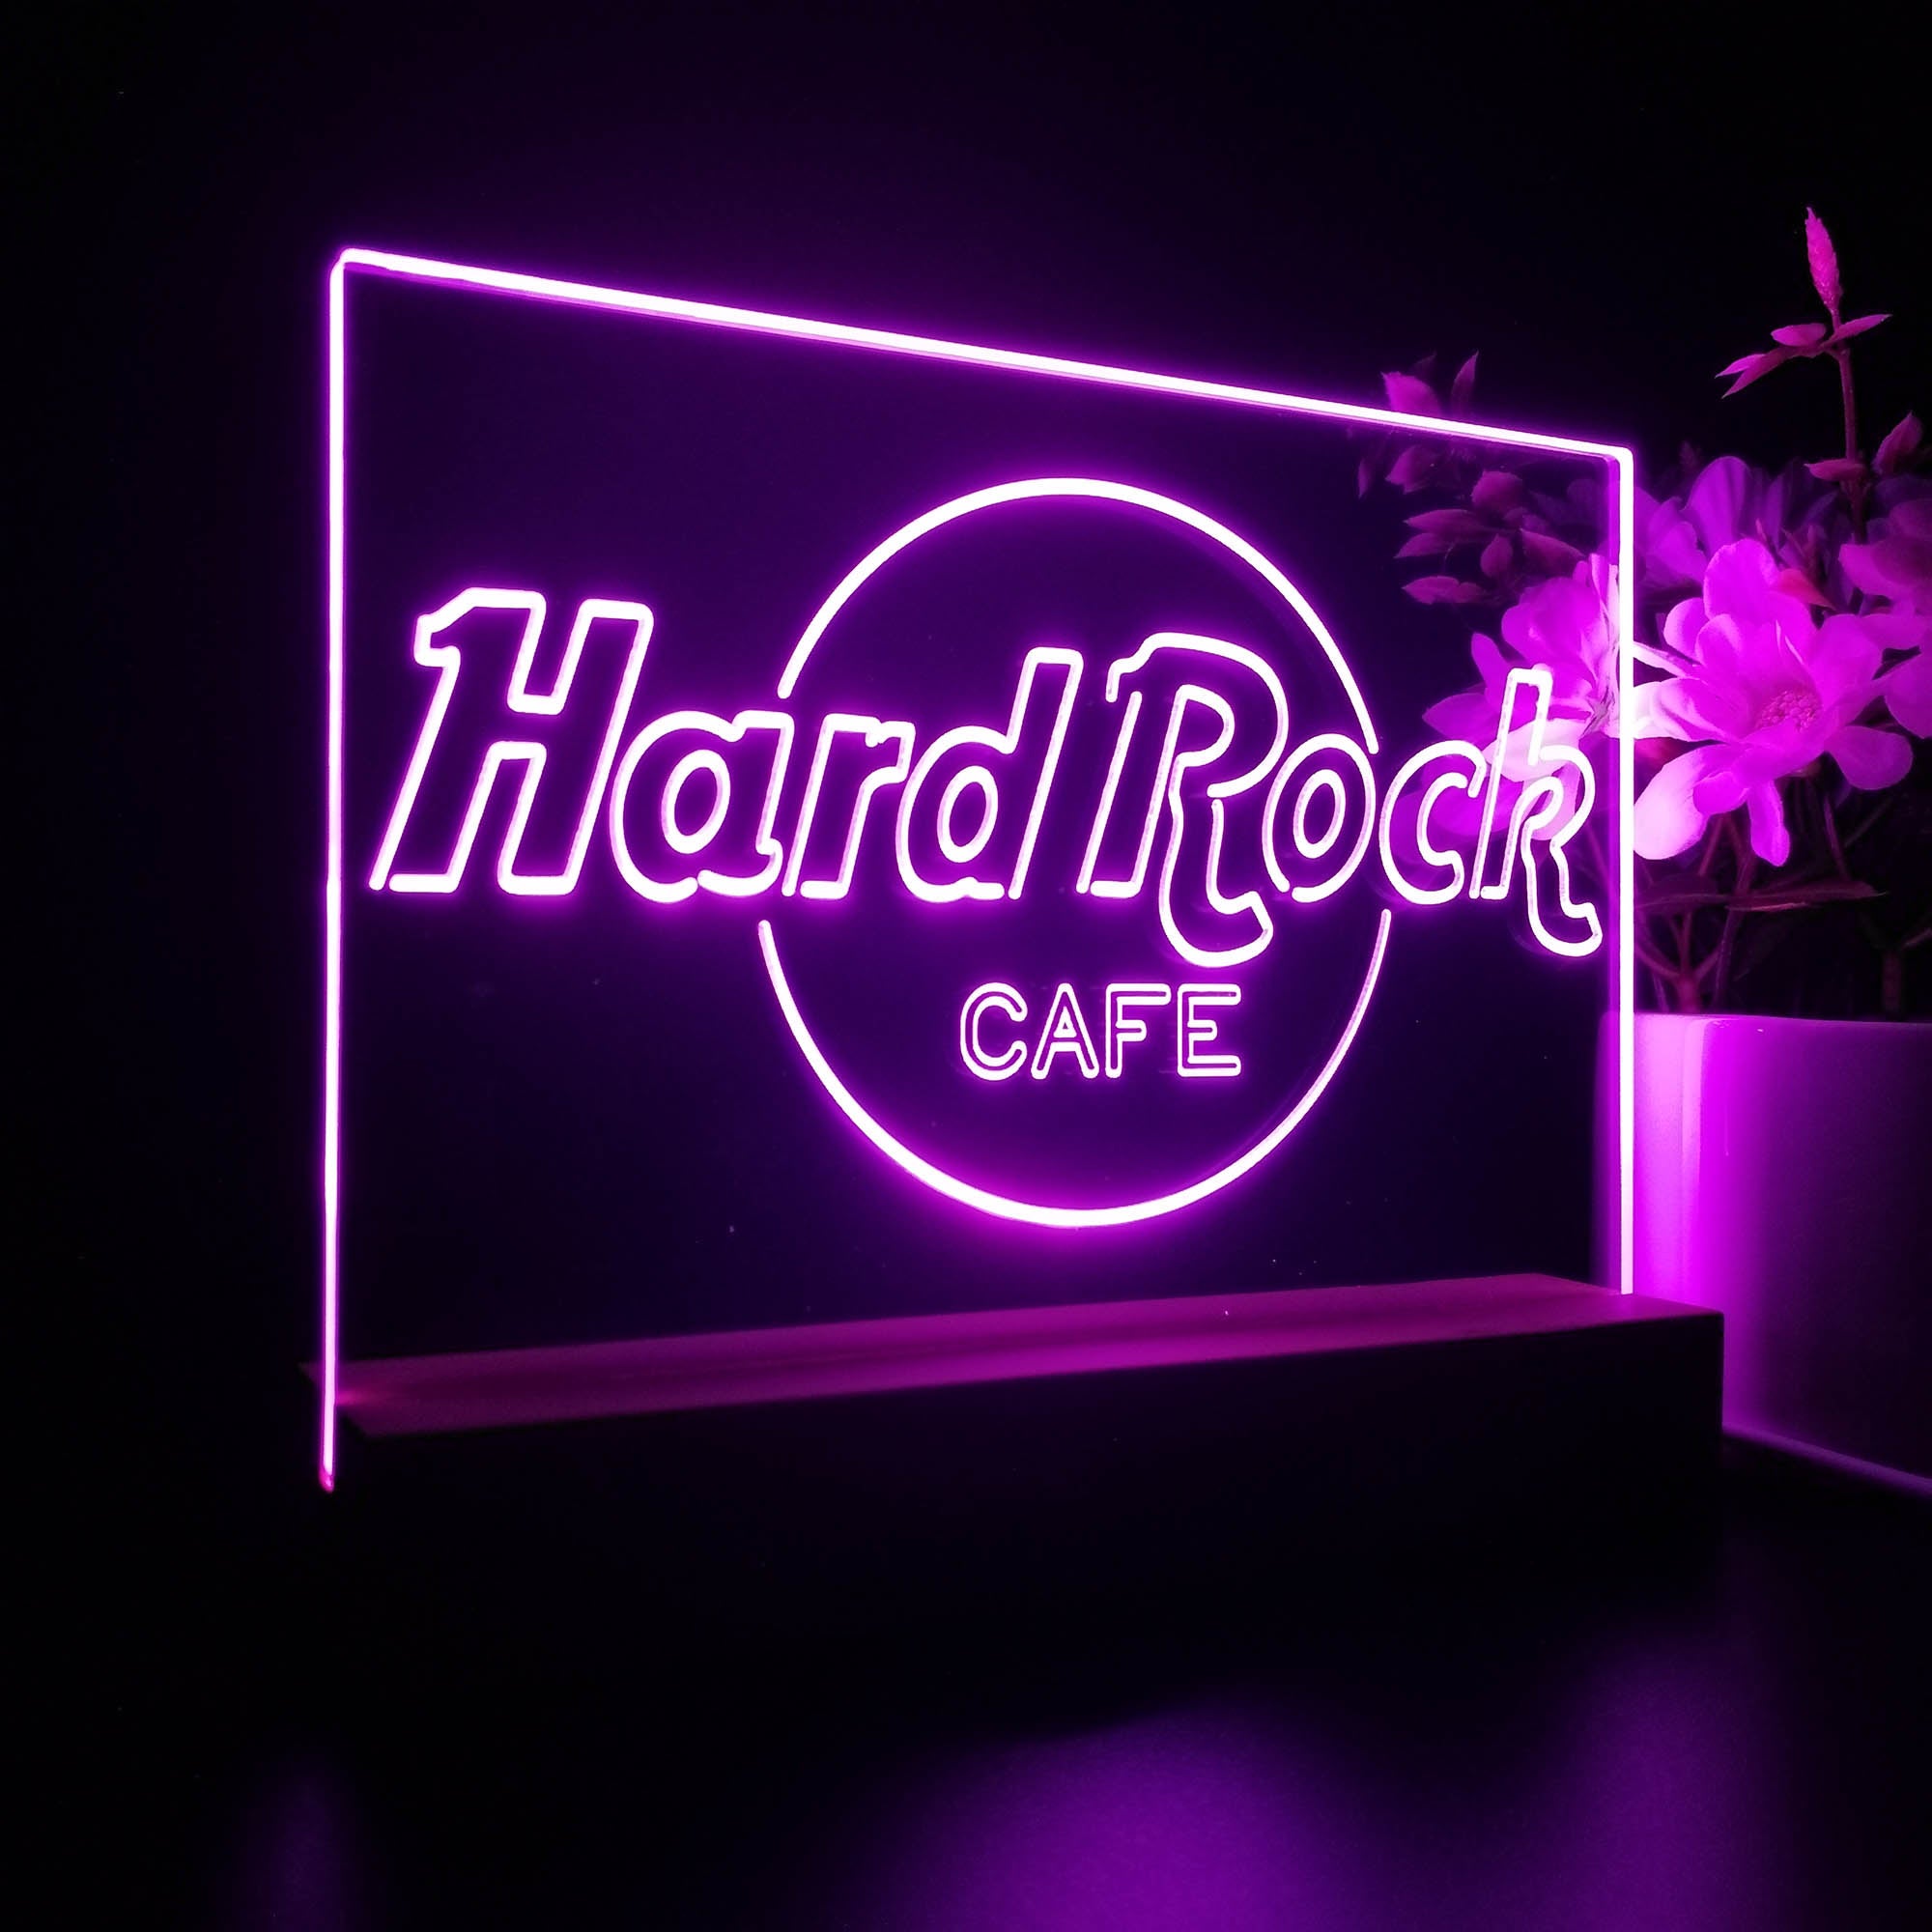 Hard Rock Café Restaurant Neon Sign Pub Bar Lamp